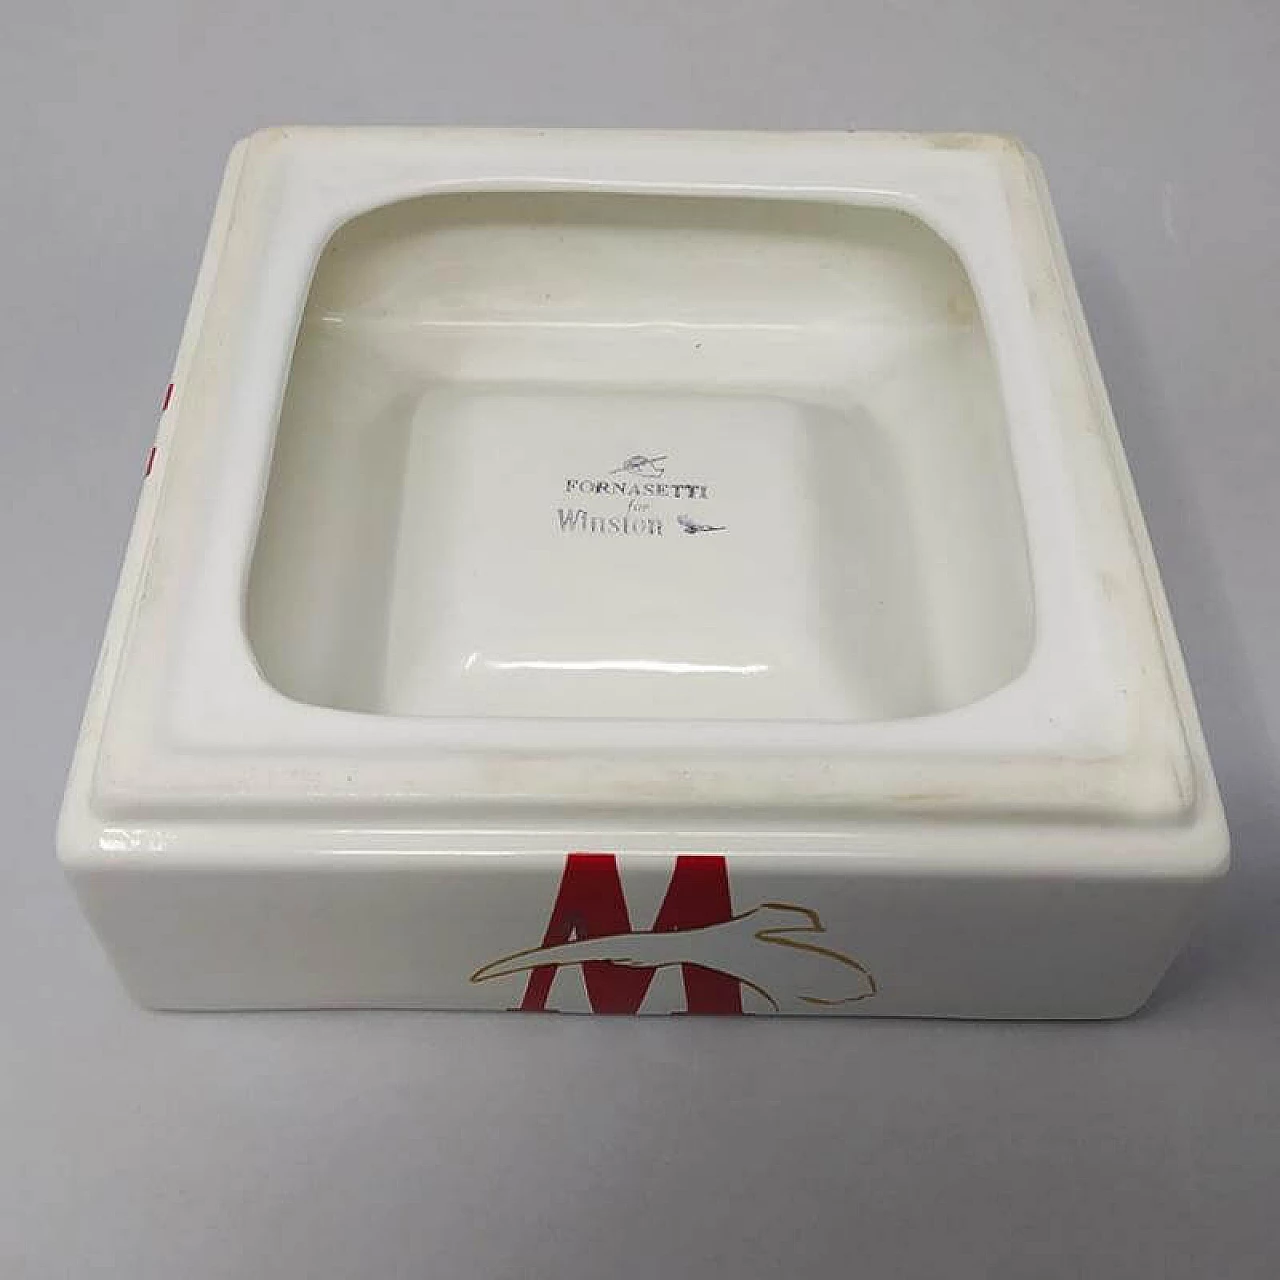 Ceramic empty pocket by Fornasetti for Winston, 1970s 1176919